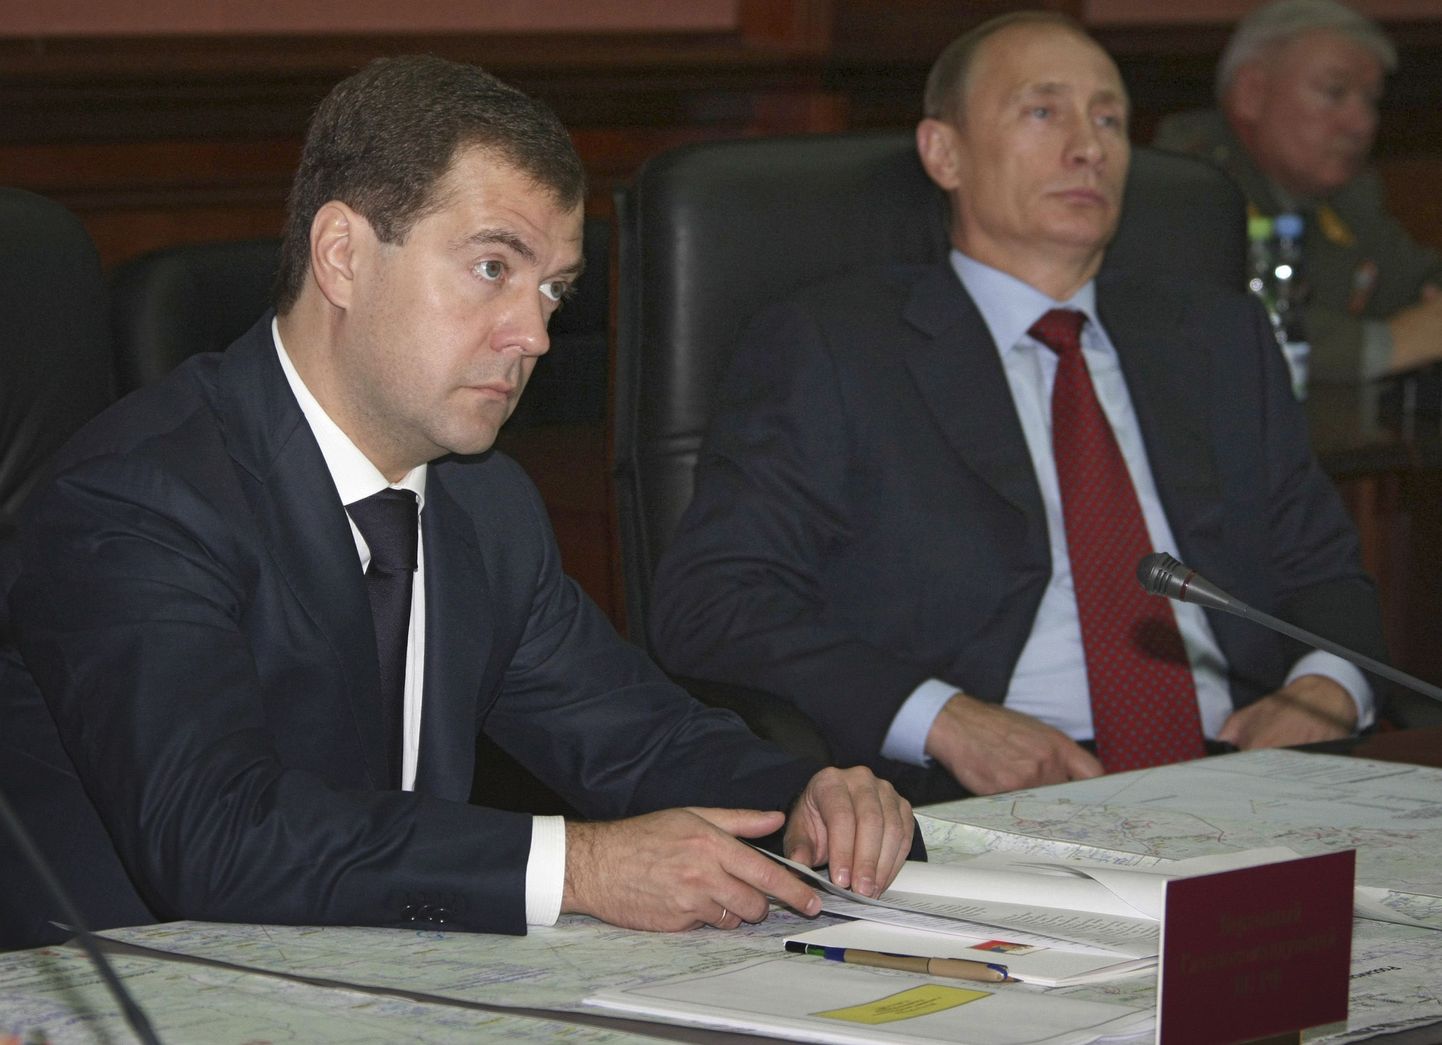 Venemaa president Dmitri Medvedev, kõrval halli kardinali rollis peaminister Vladrimir Putin.